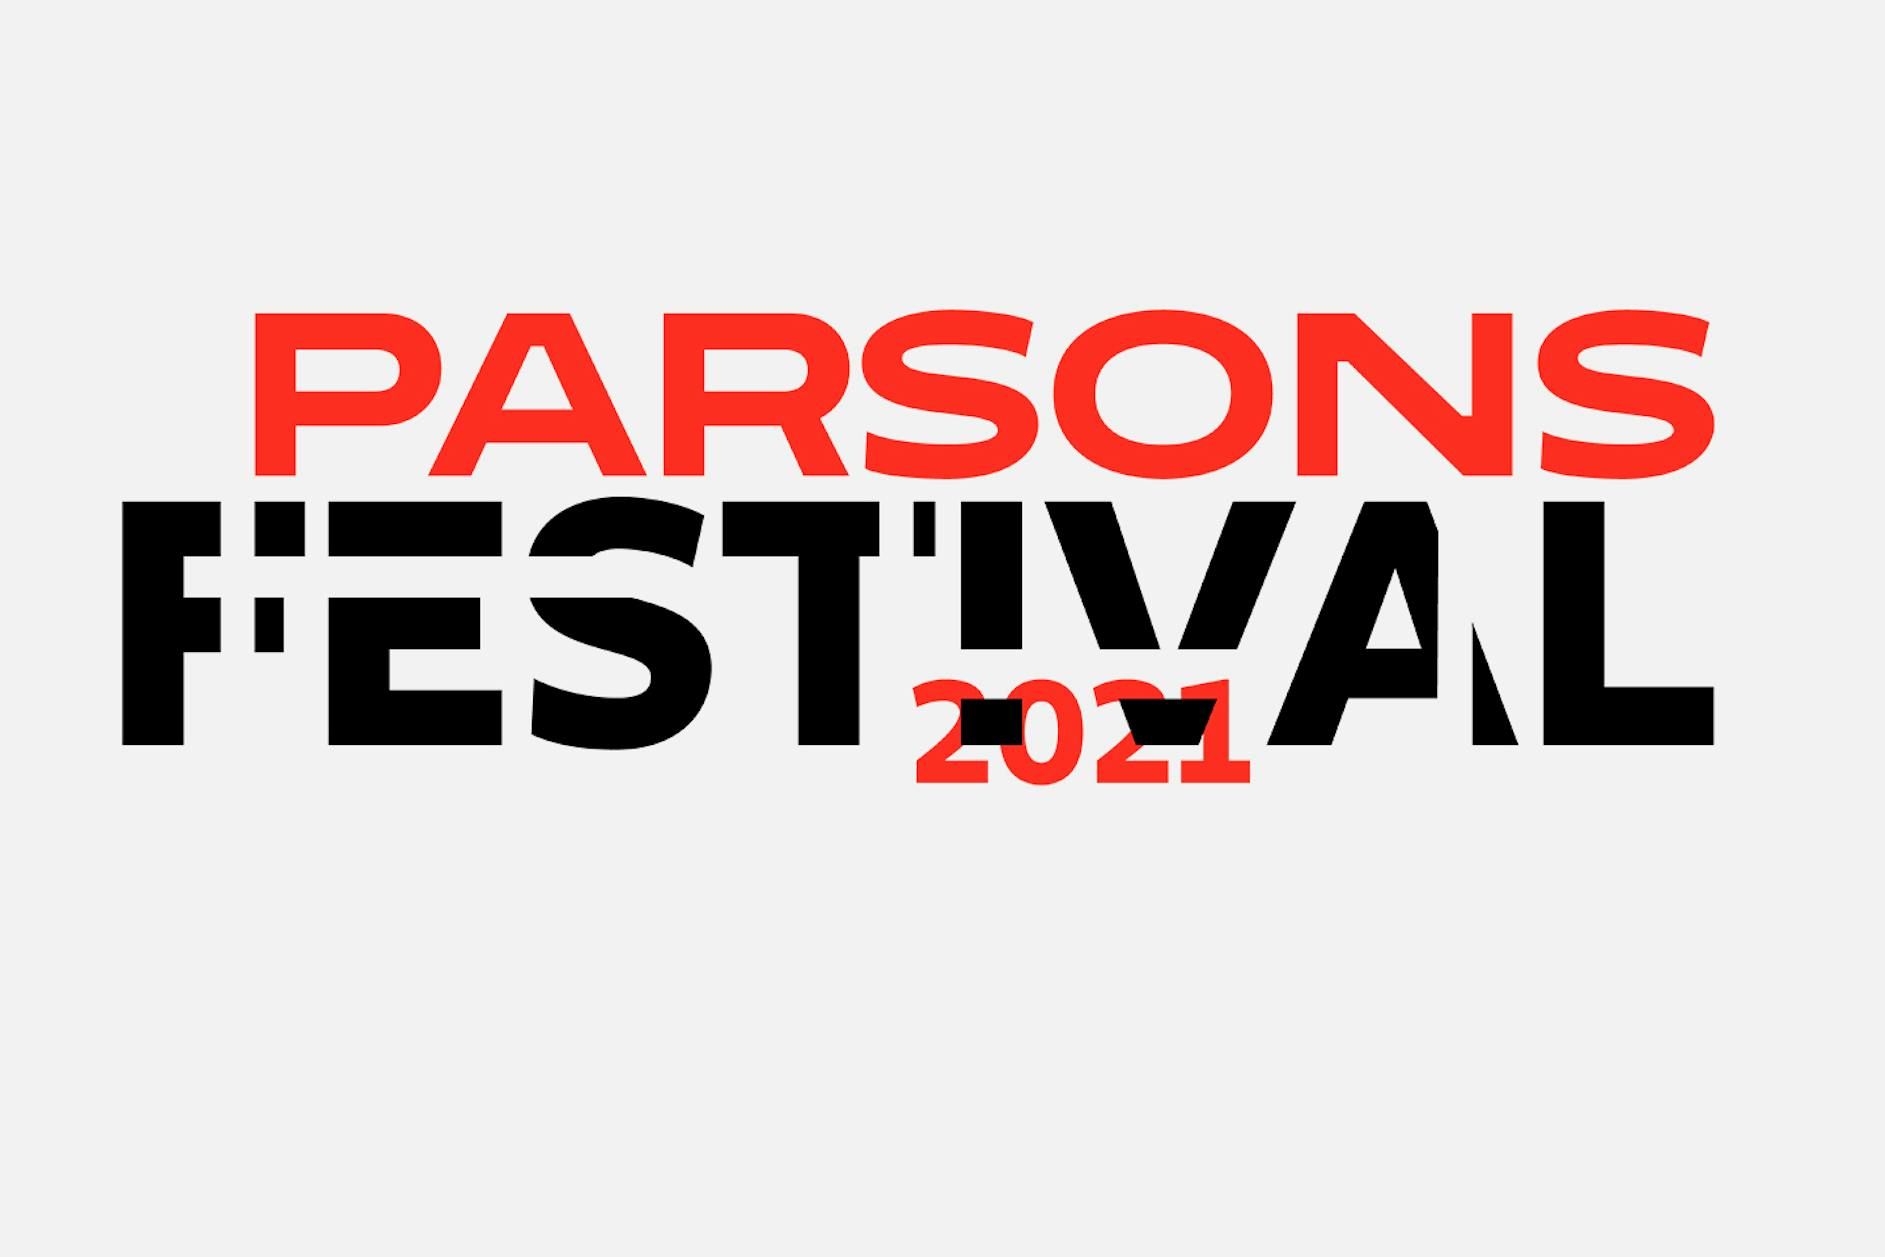 Parsons Festival 2021 Logo 1440x960 ?n=8760&fit=clip&w=1885